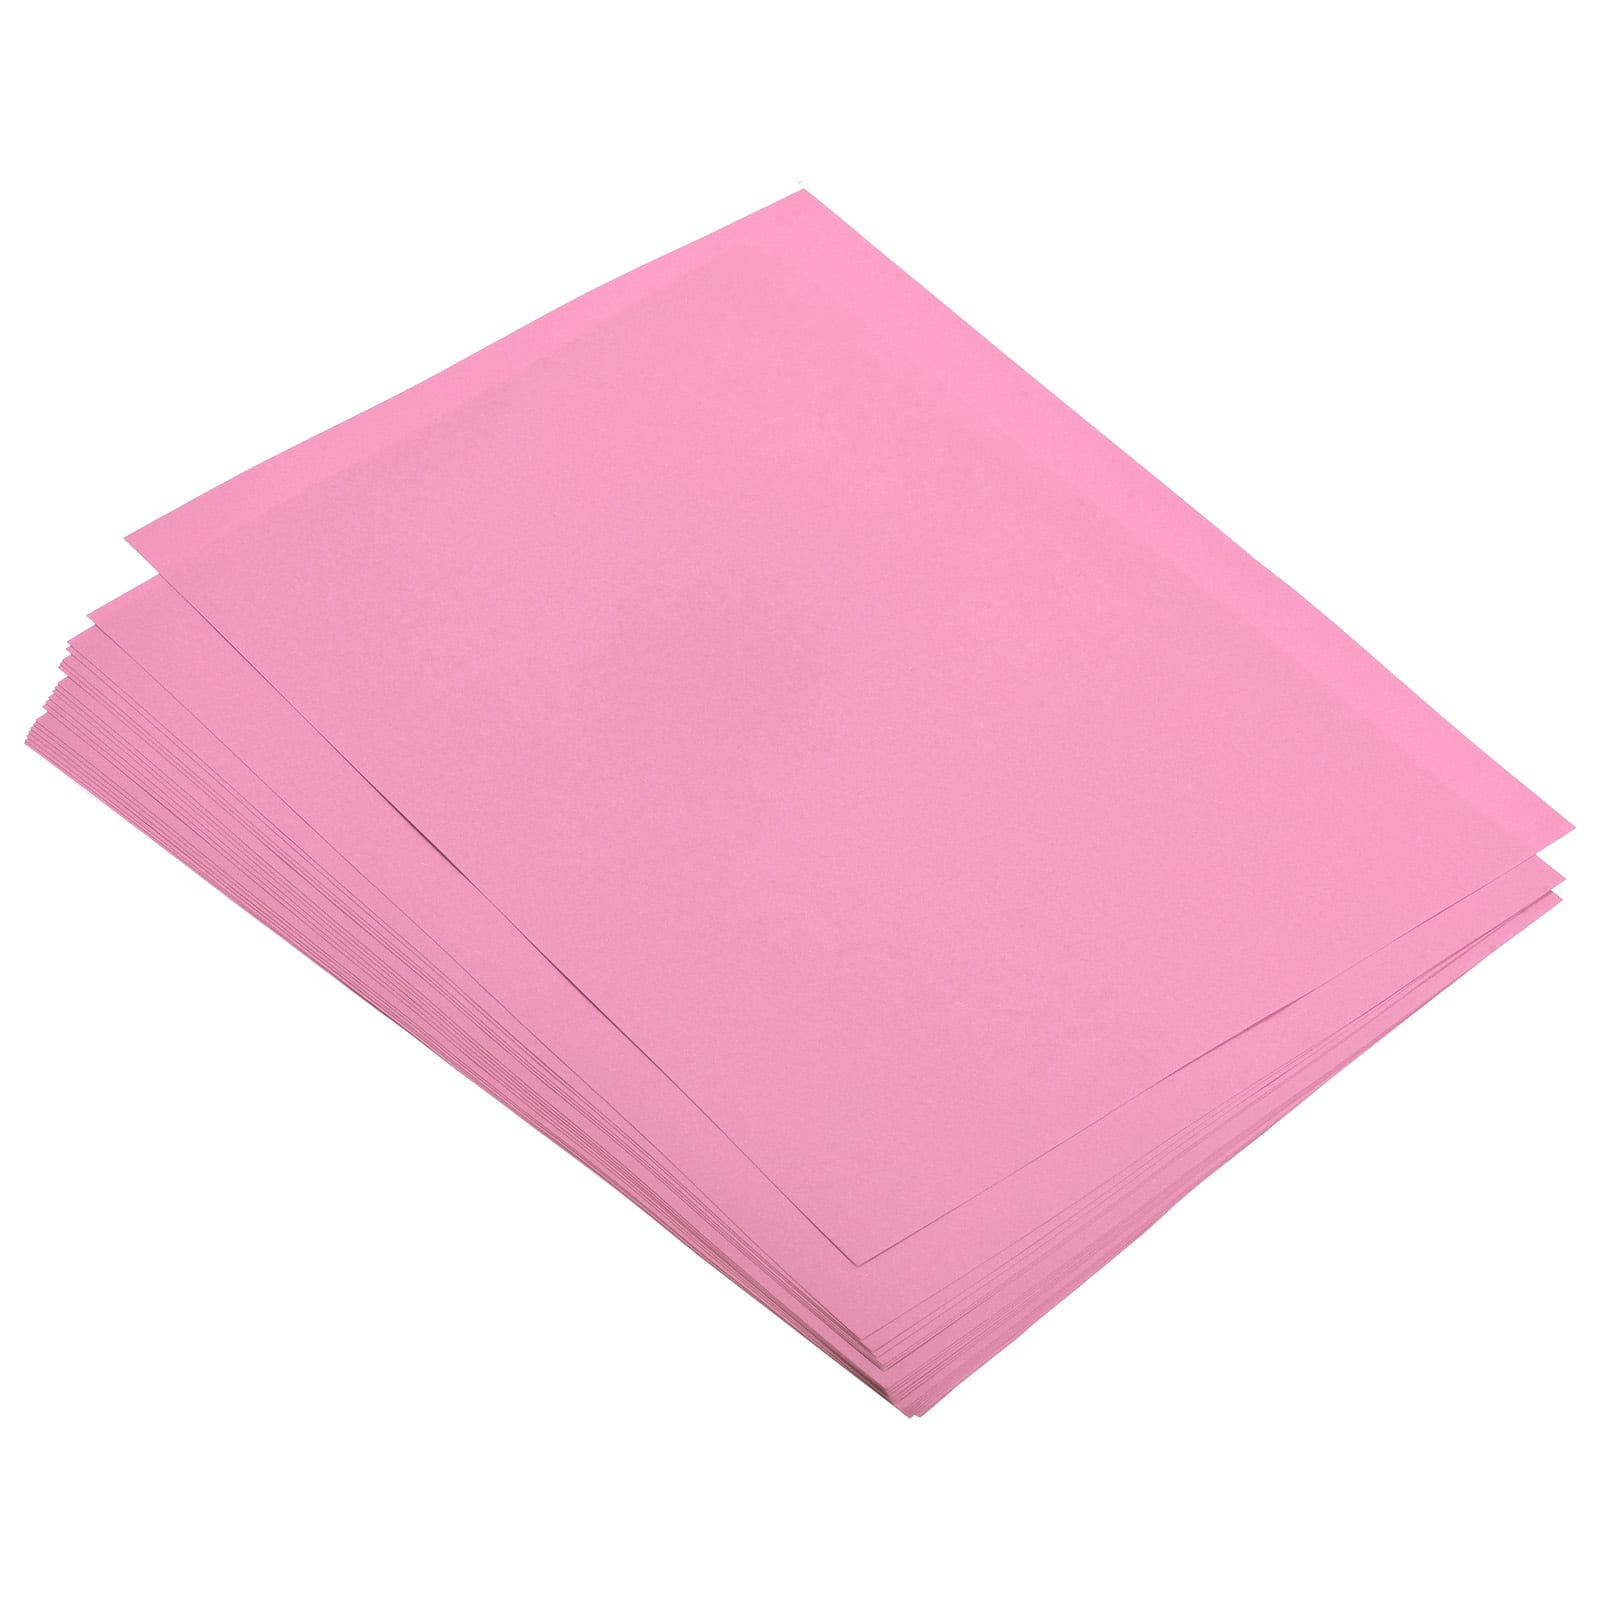 BCR™ Bond 850 Cleanroom Copy Paper, 8-1/2 x 11, Pink, 250 Sheet per